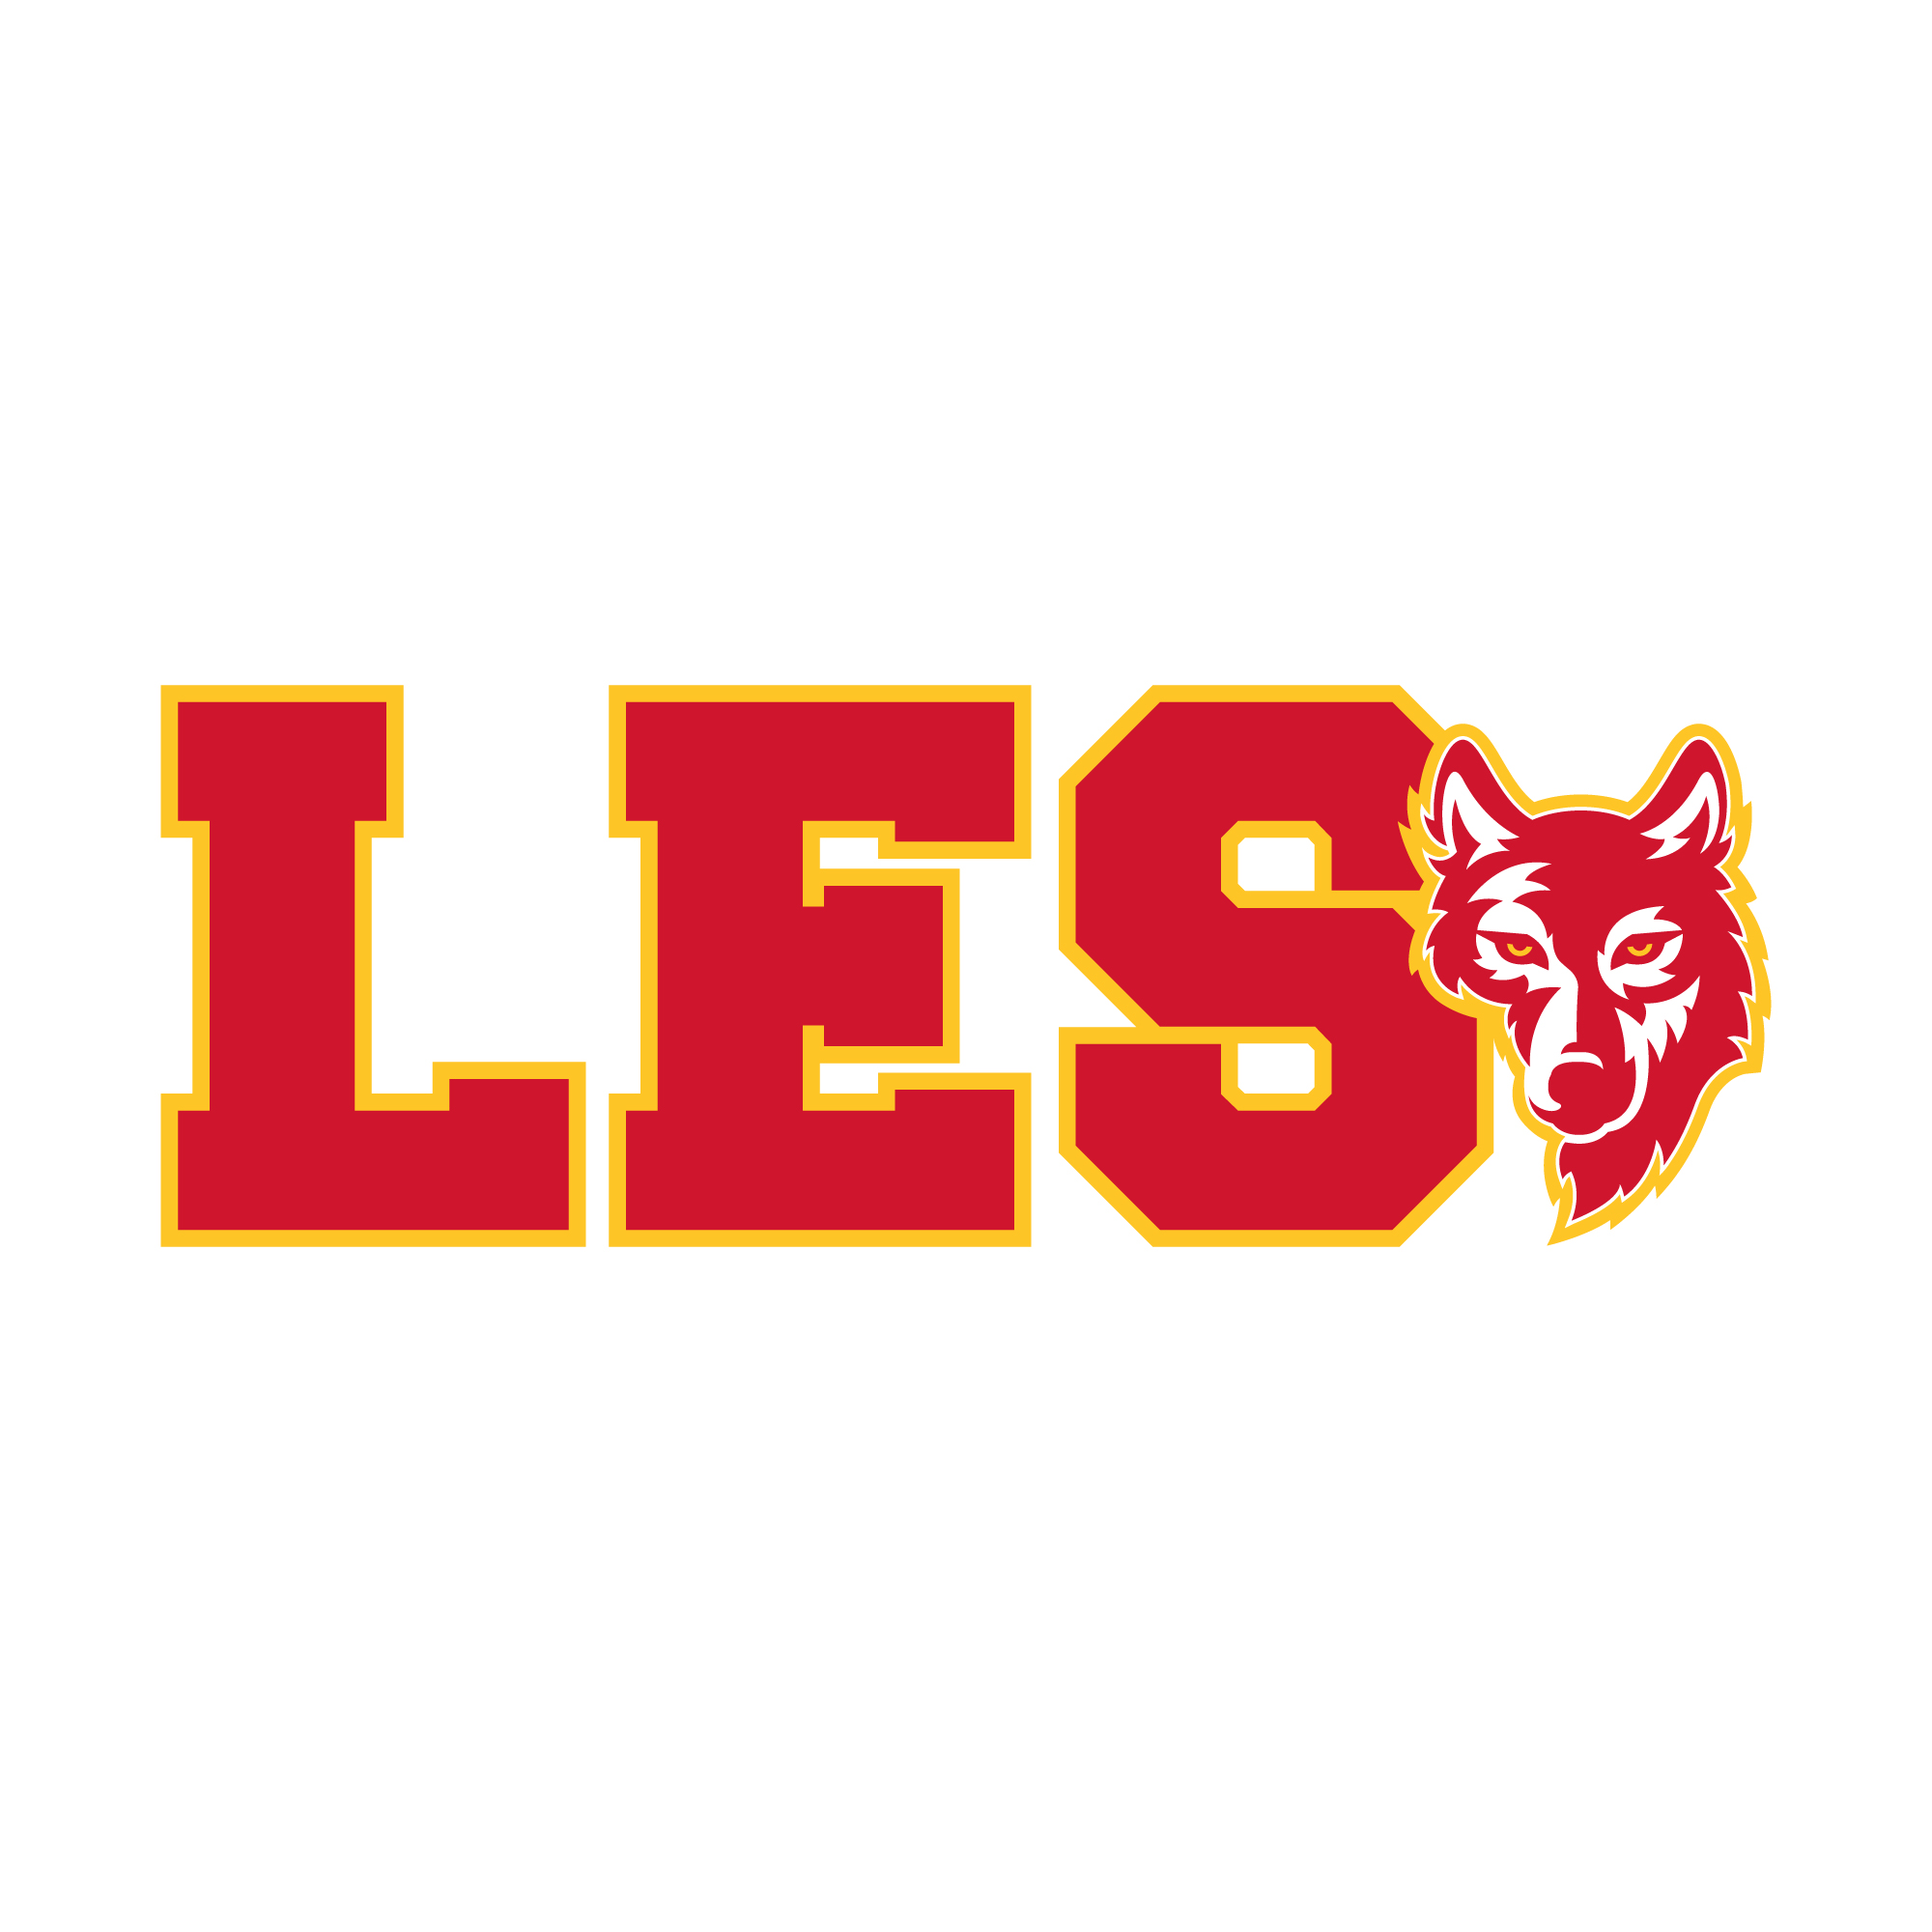 LES logo